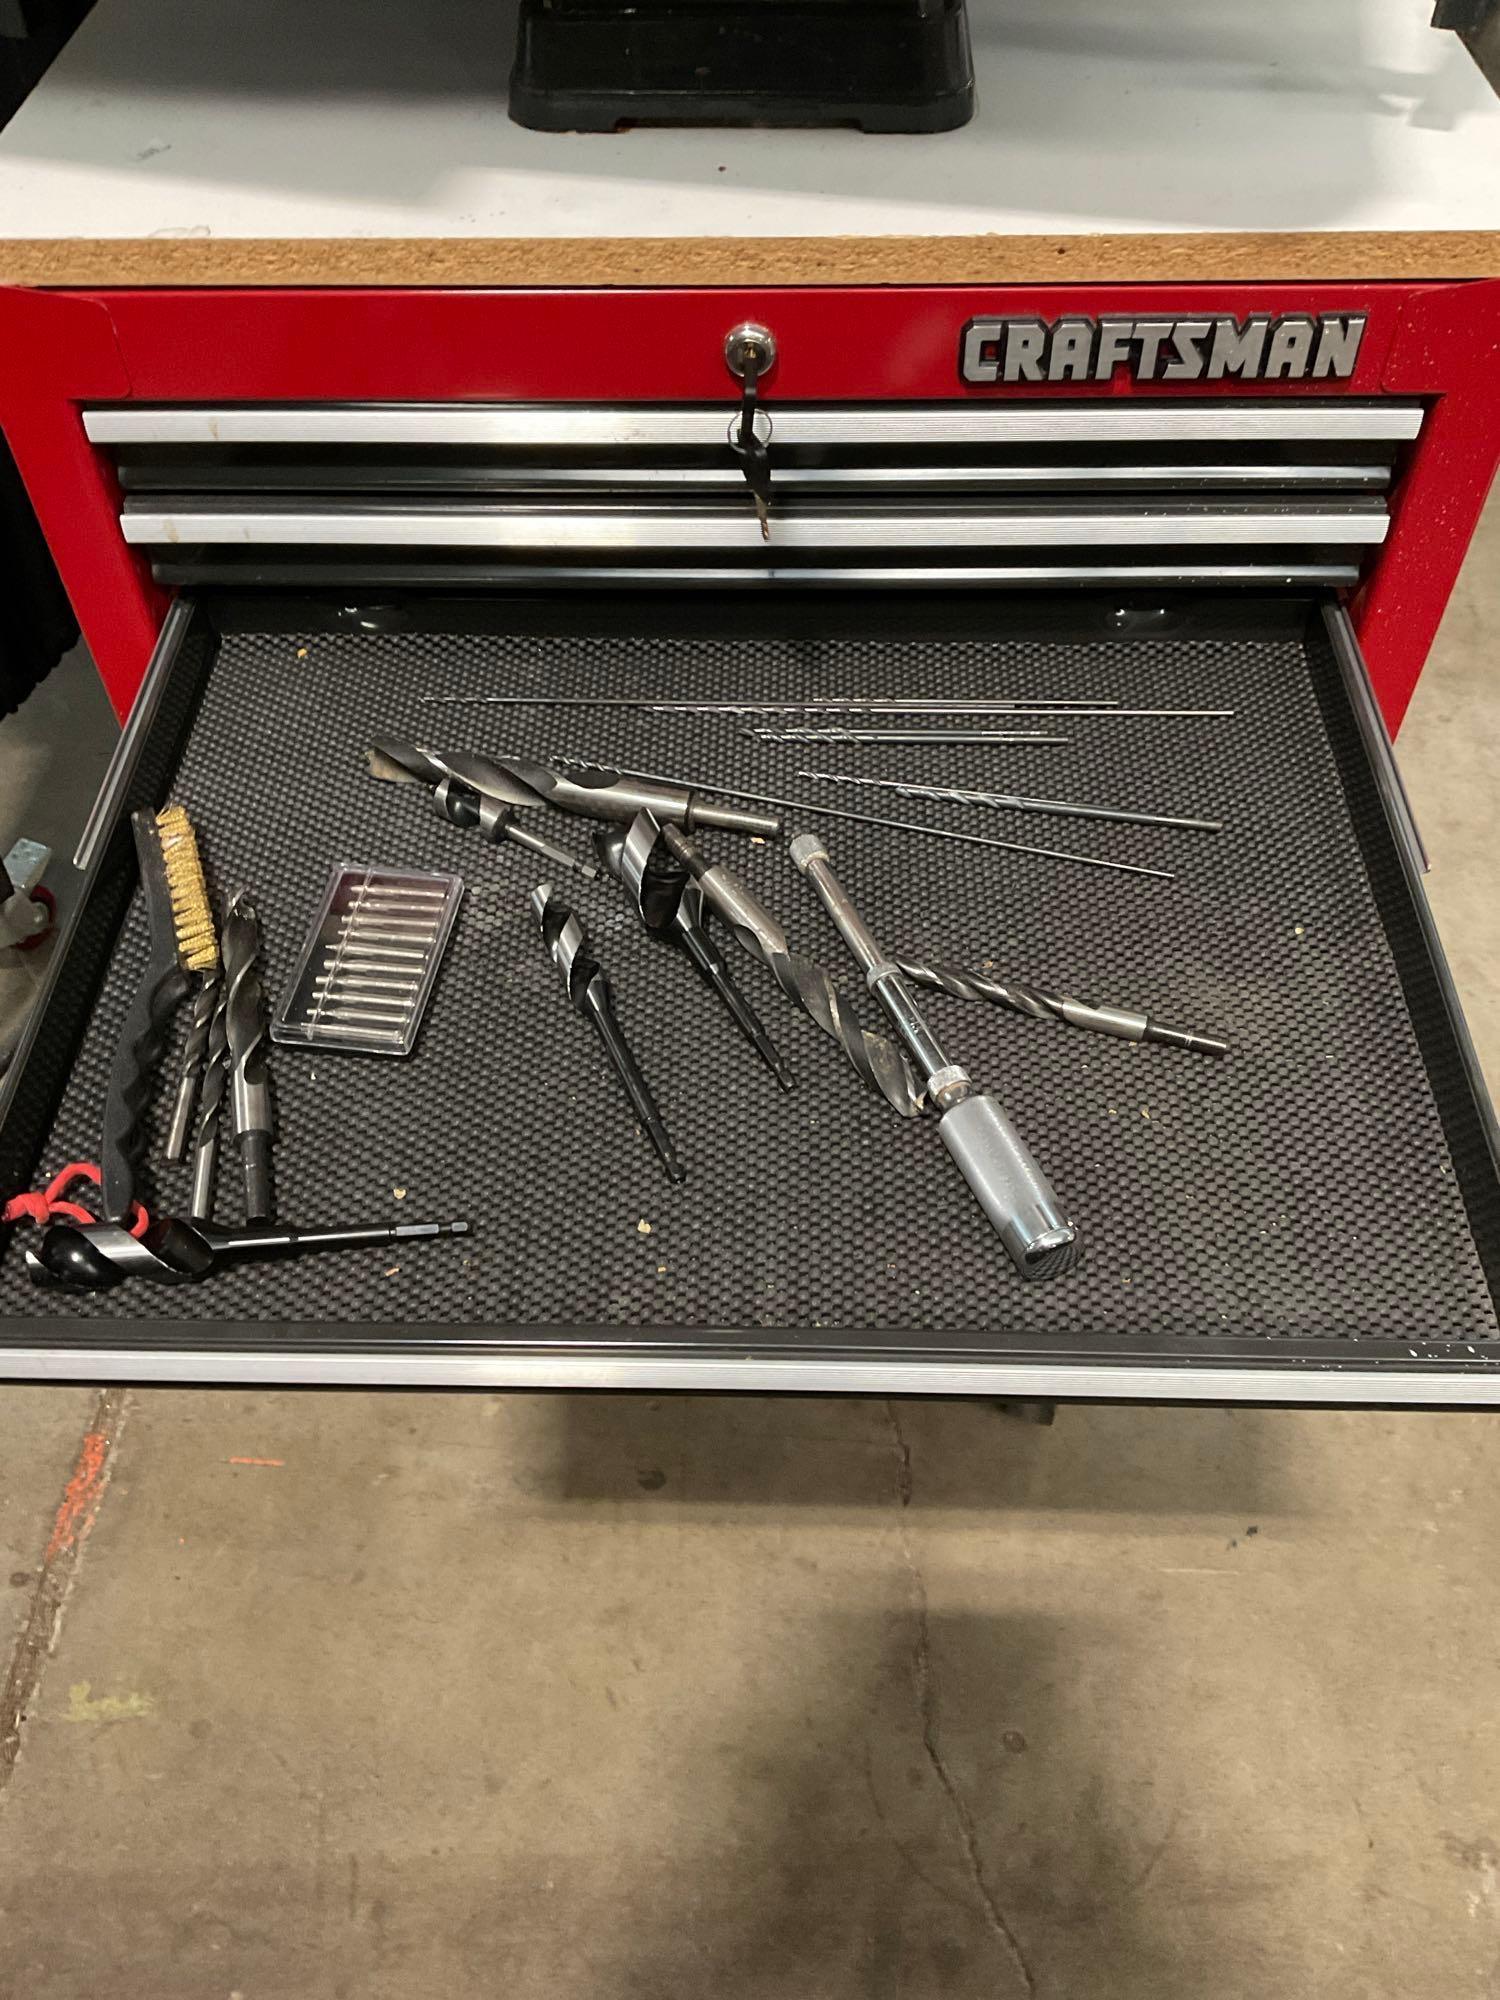 Sears Craftsman 10" Multi Speed Drill Press 3/8" Chuck on Craftsman Rolling Tool Cart - See pics